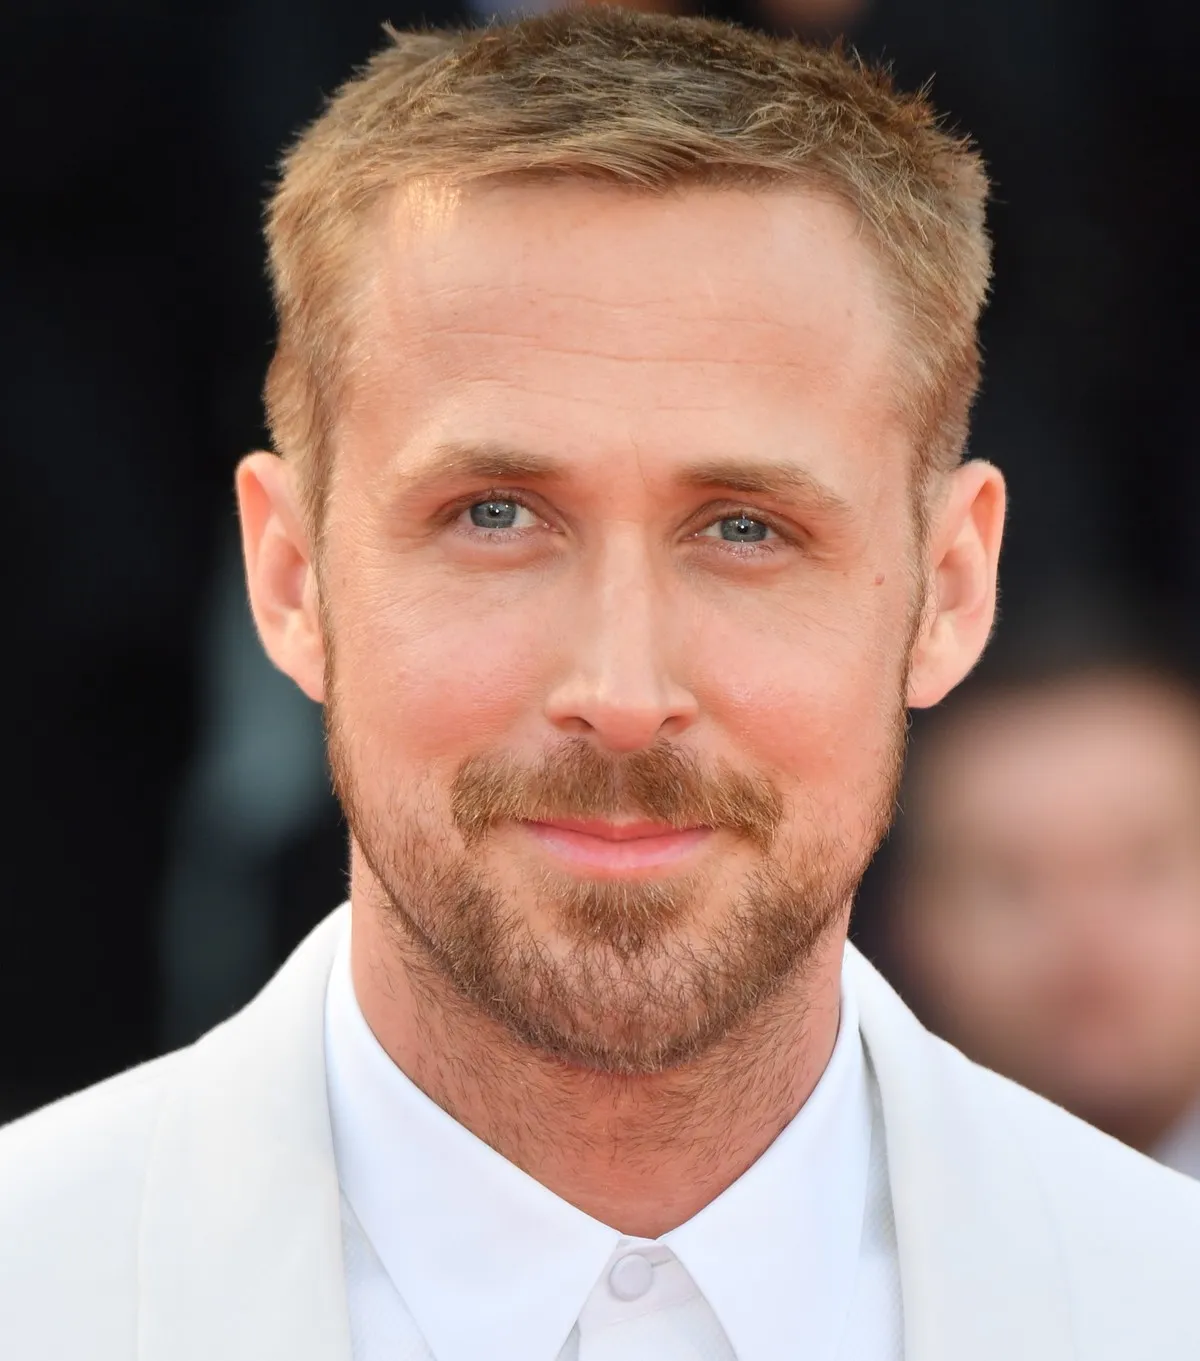 Ryan Gosling: 87.48 Percent Accuracy